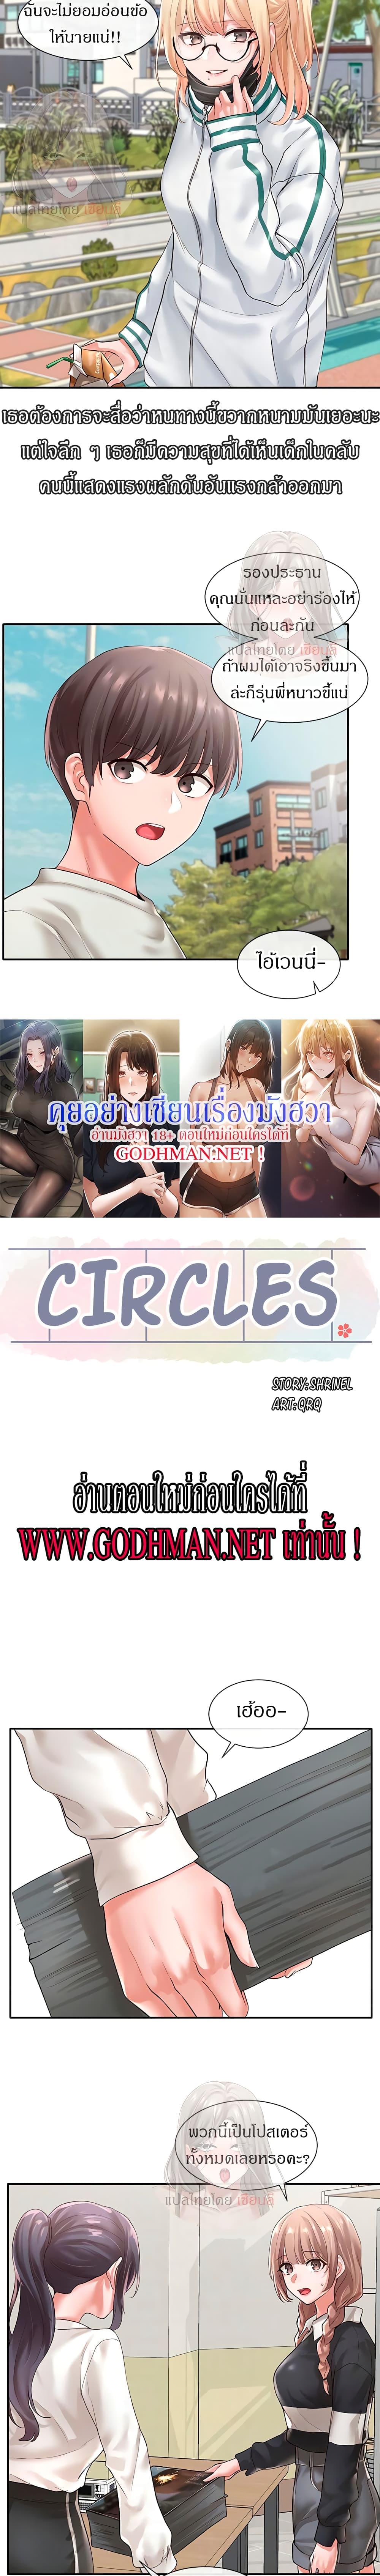 Theater Society (Circles) 51-51